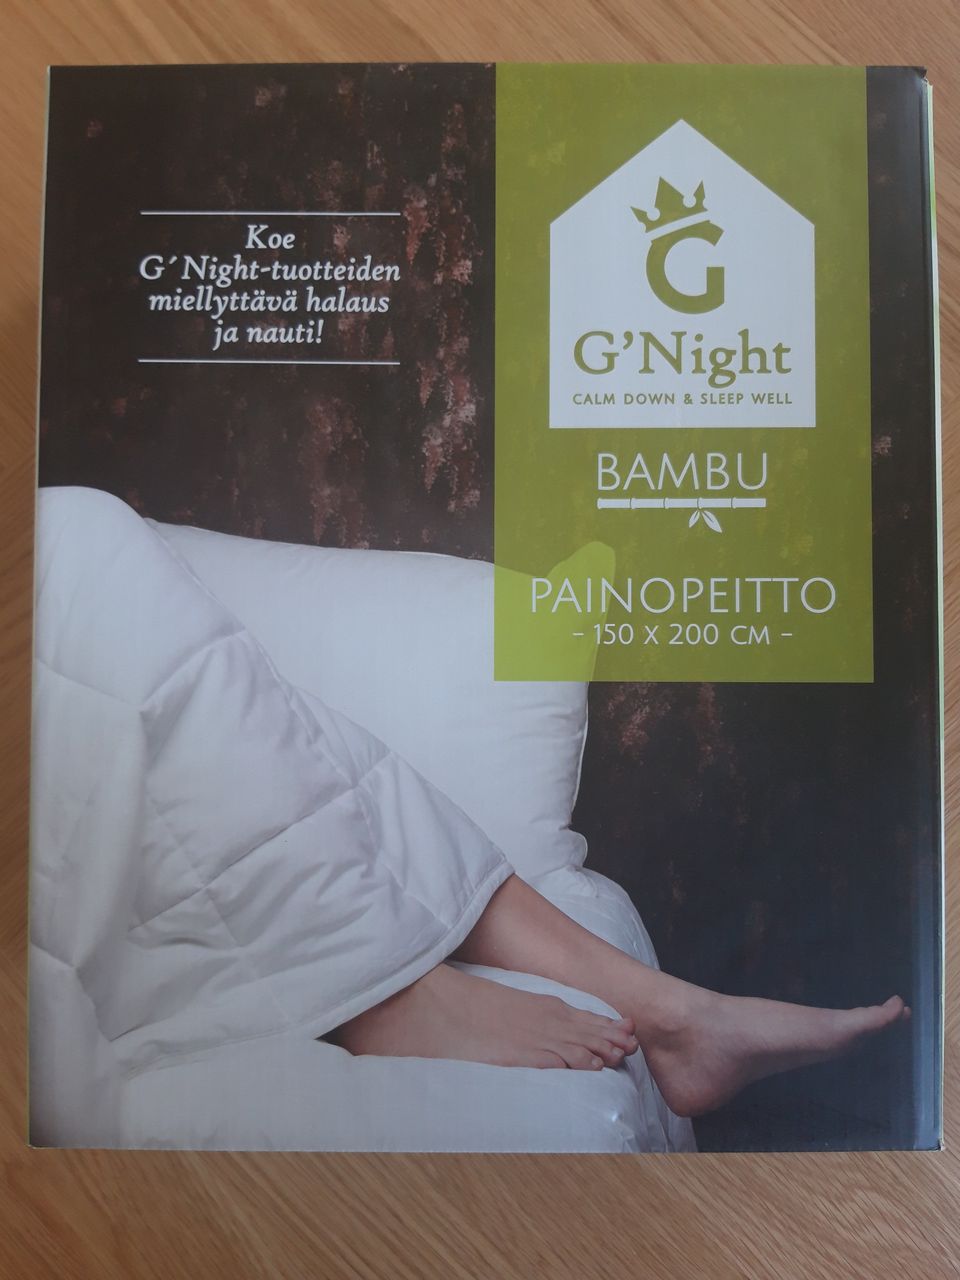 Uusia G'Night Bambu -painopeittoja